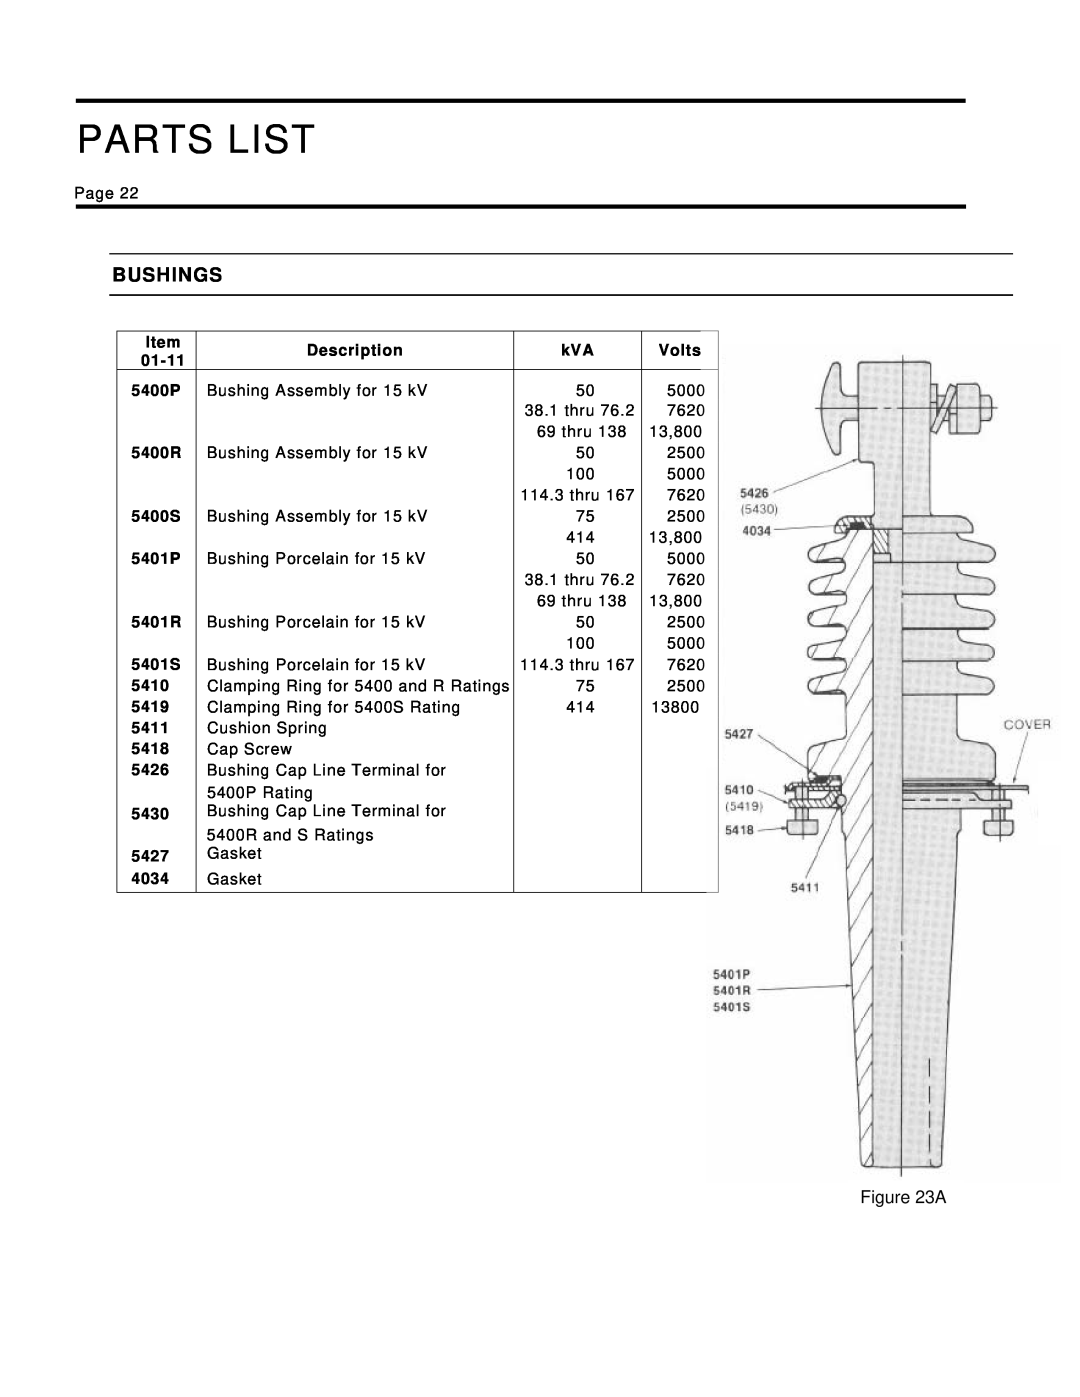 Siemens 21-115532-001 manual Bushings, A, Parts List 